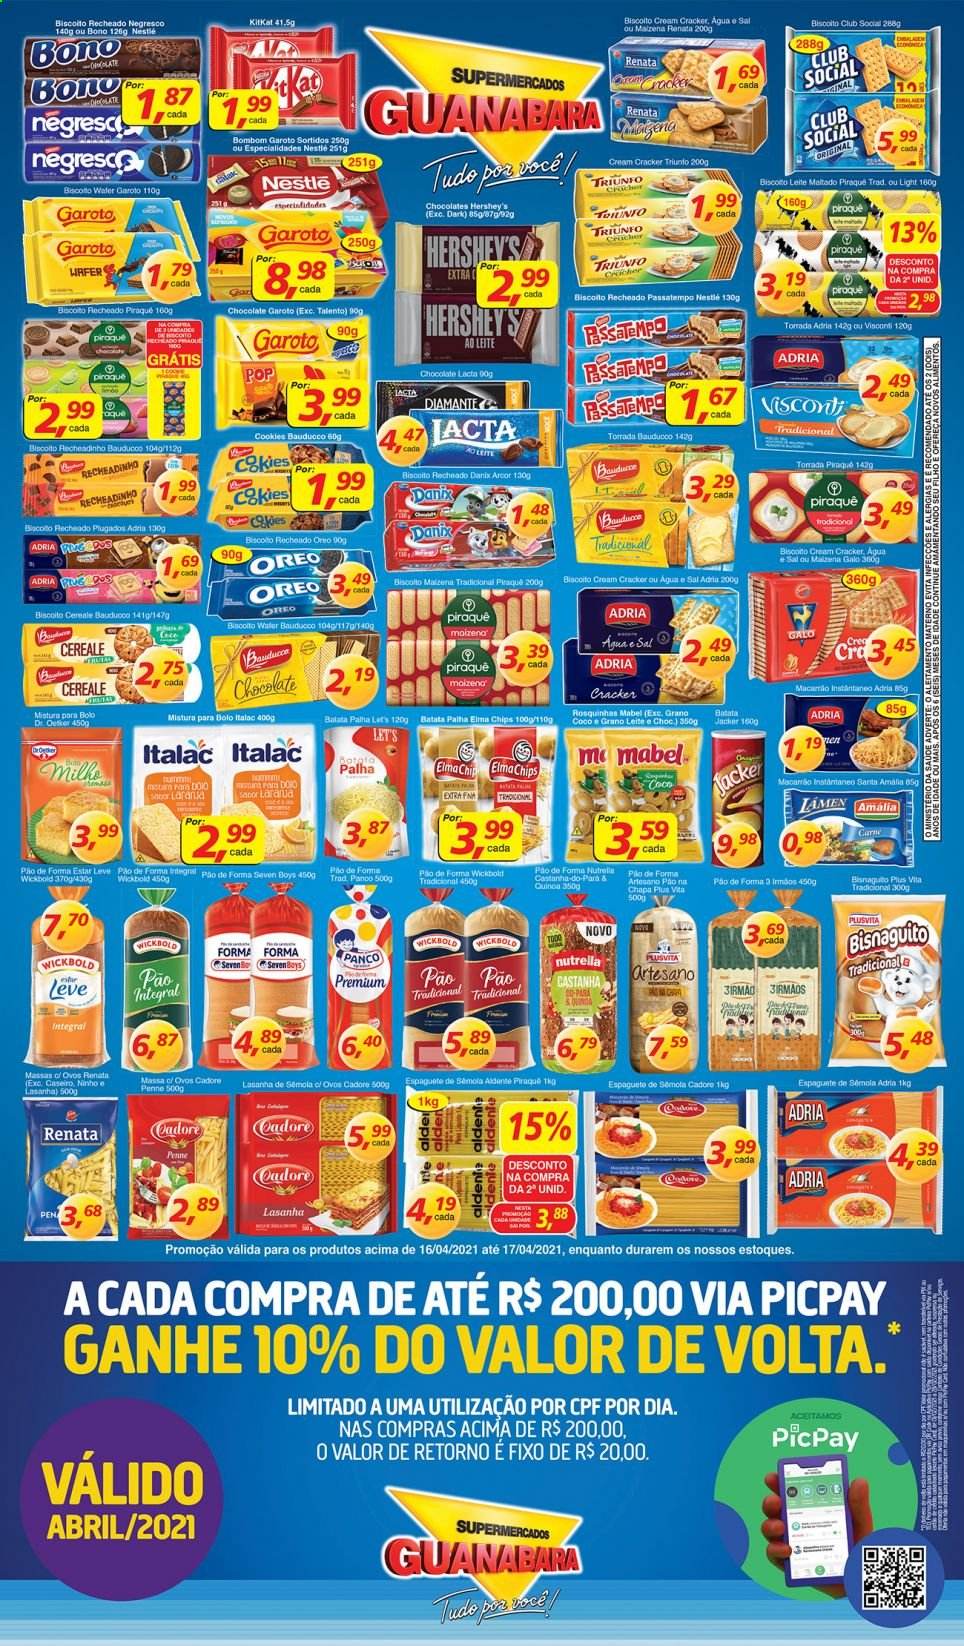 Encarte Supermercados Guanabara  - 16.04.2021 - 17.04.2021.